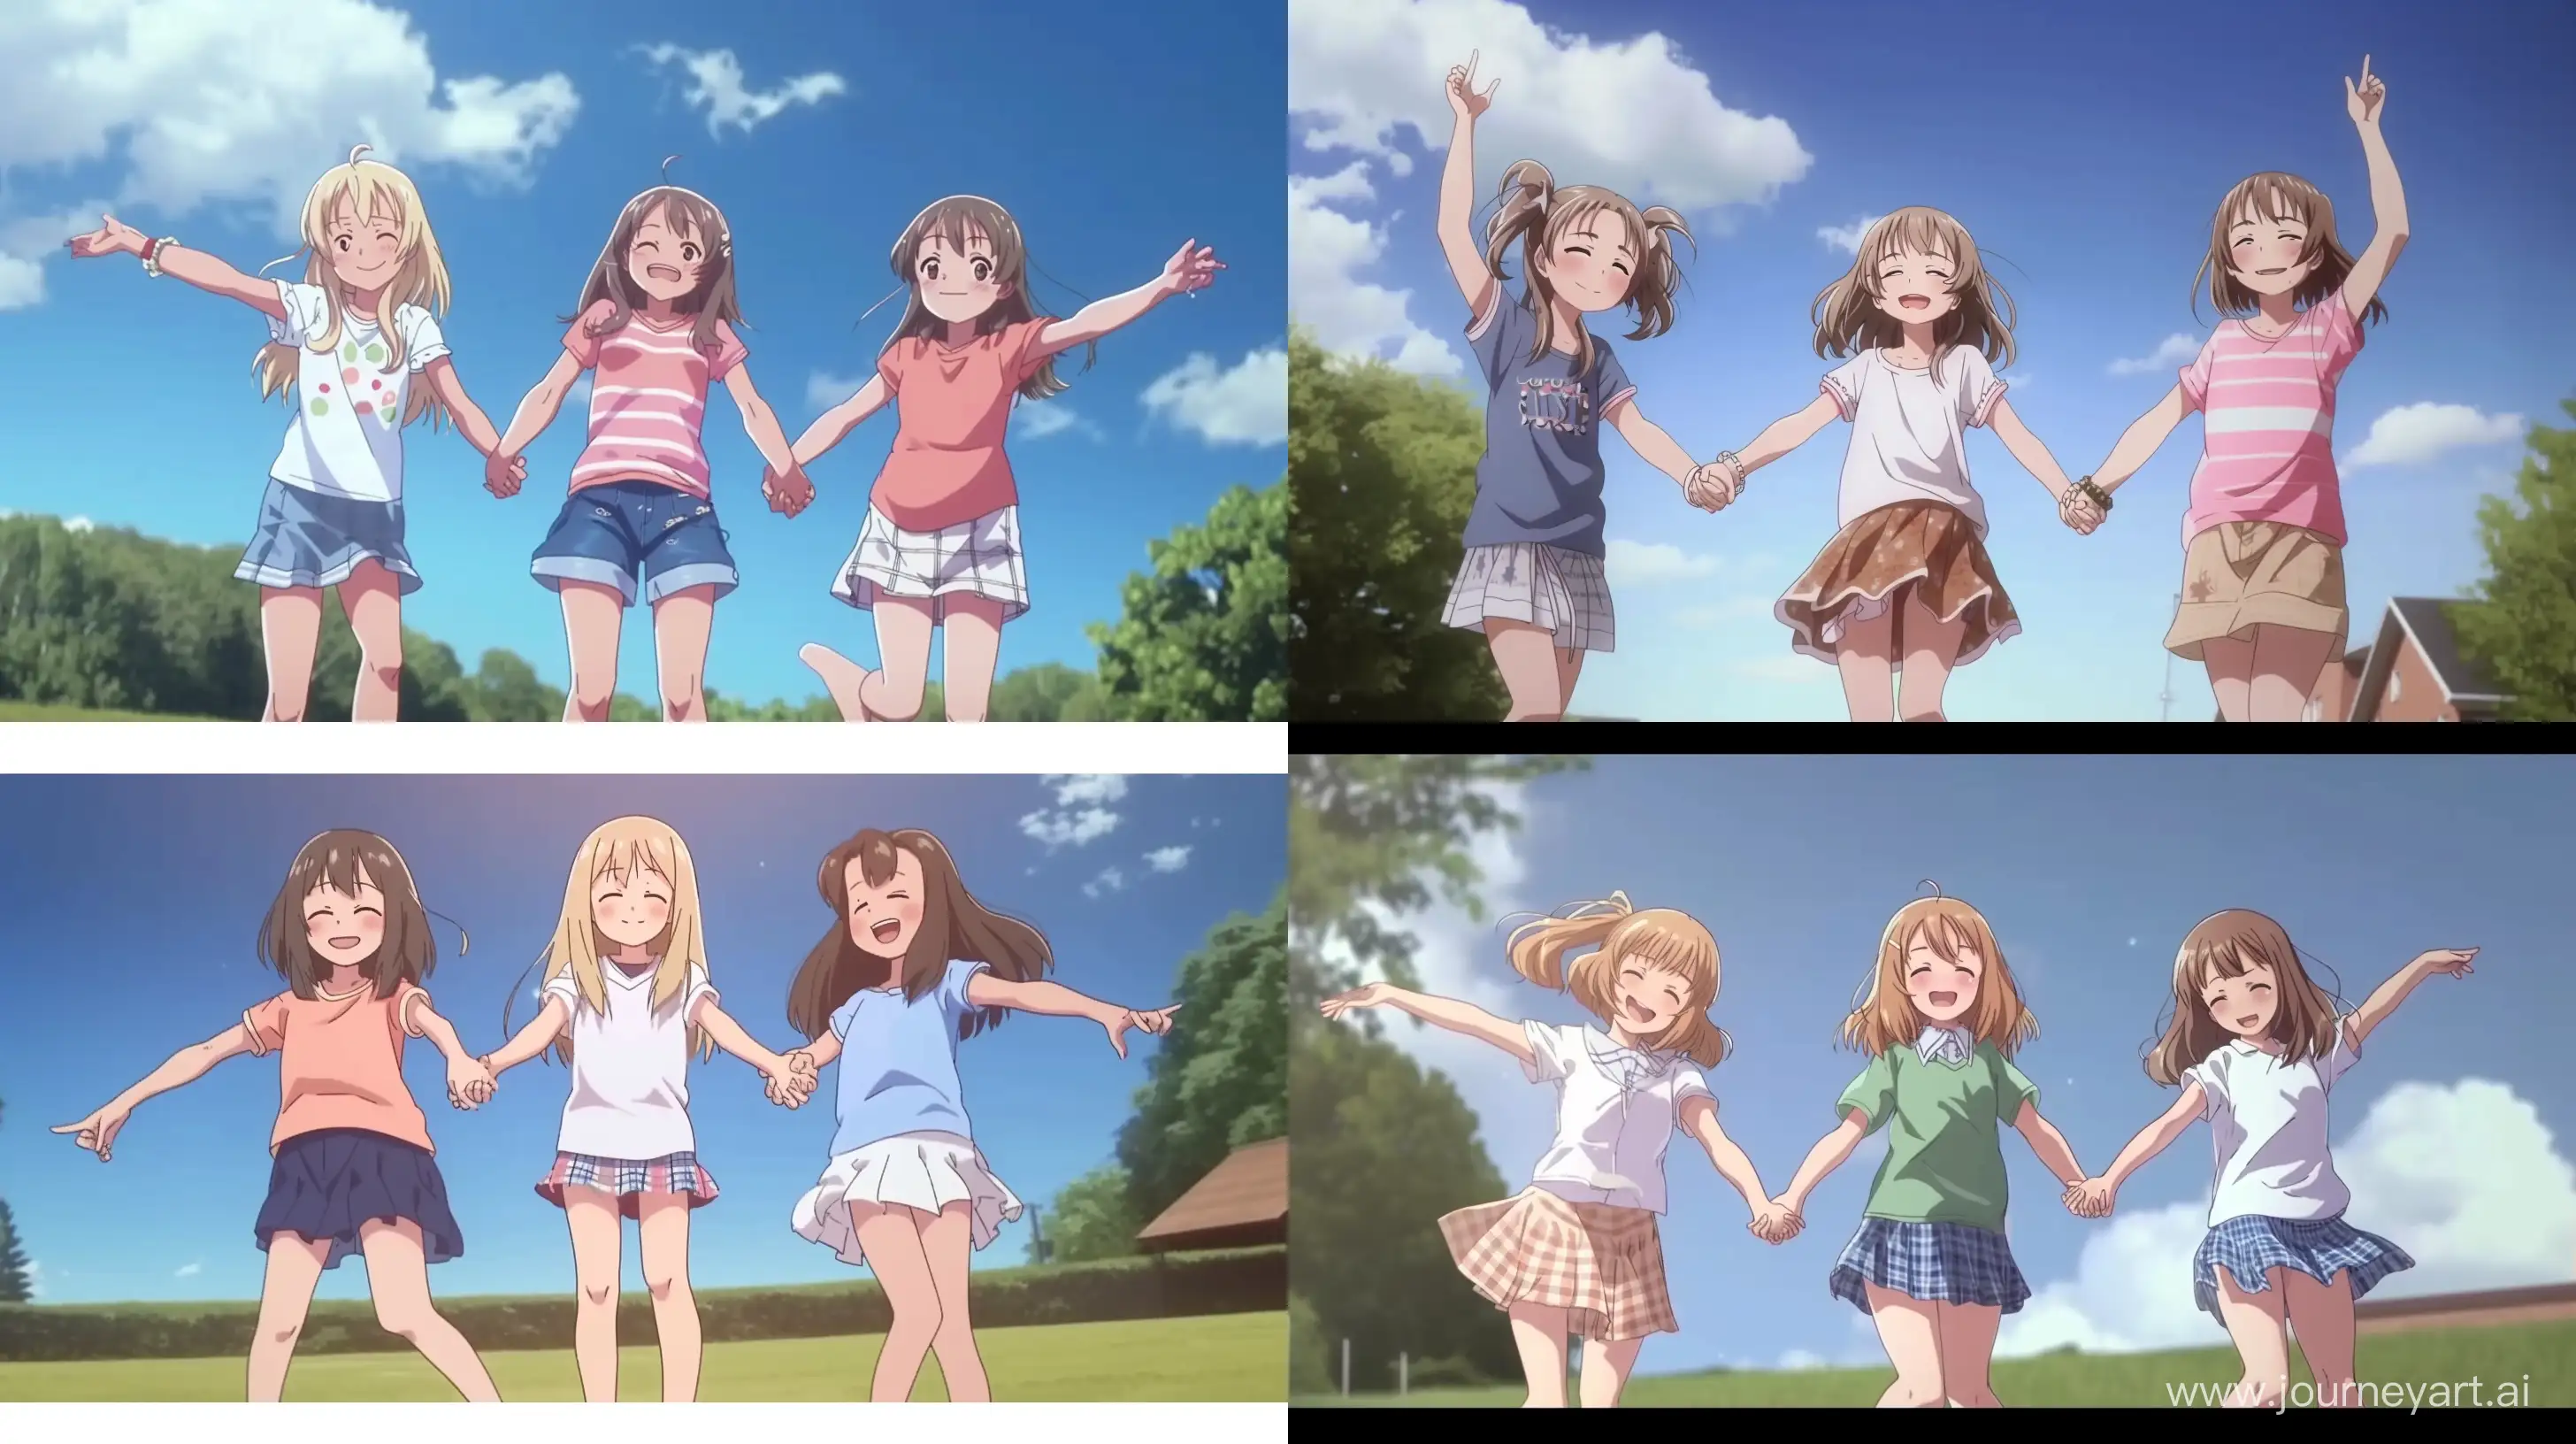 Joyful-Chibi-Trio-Dancing-in-Silly-Poses-Comedy-Anime-Scene